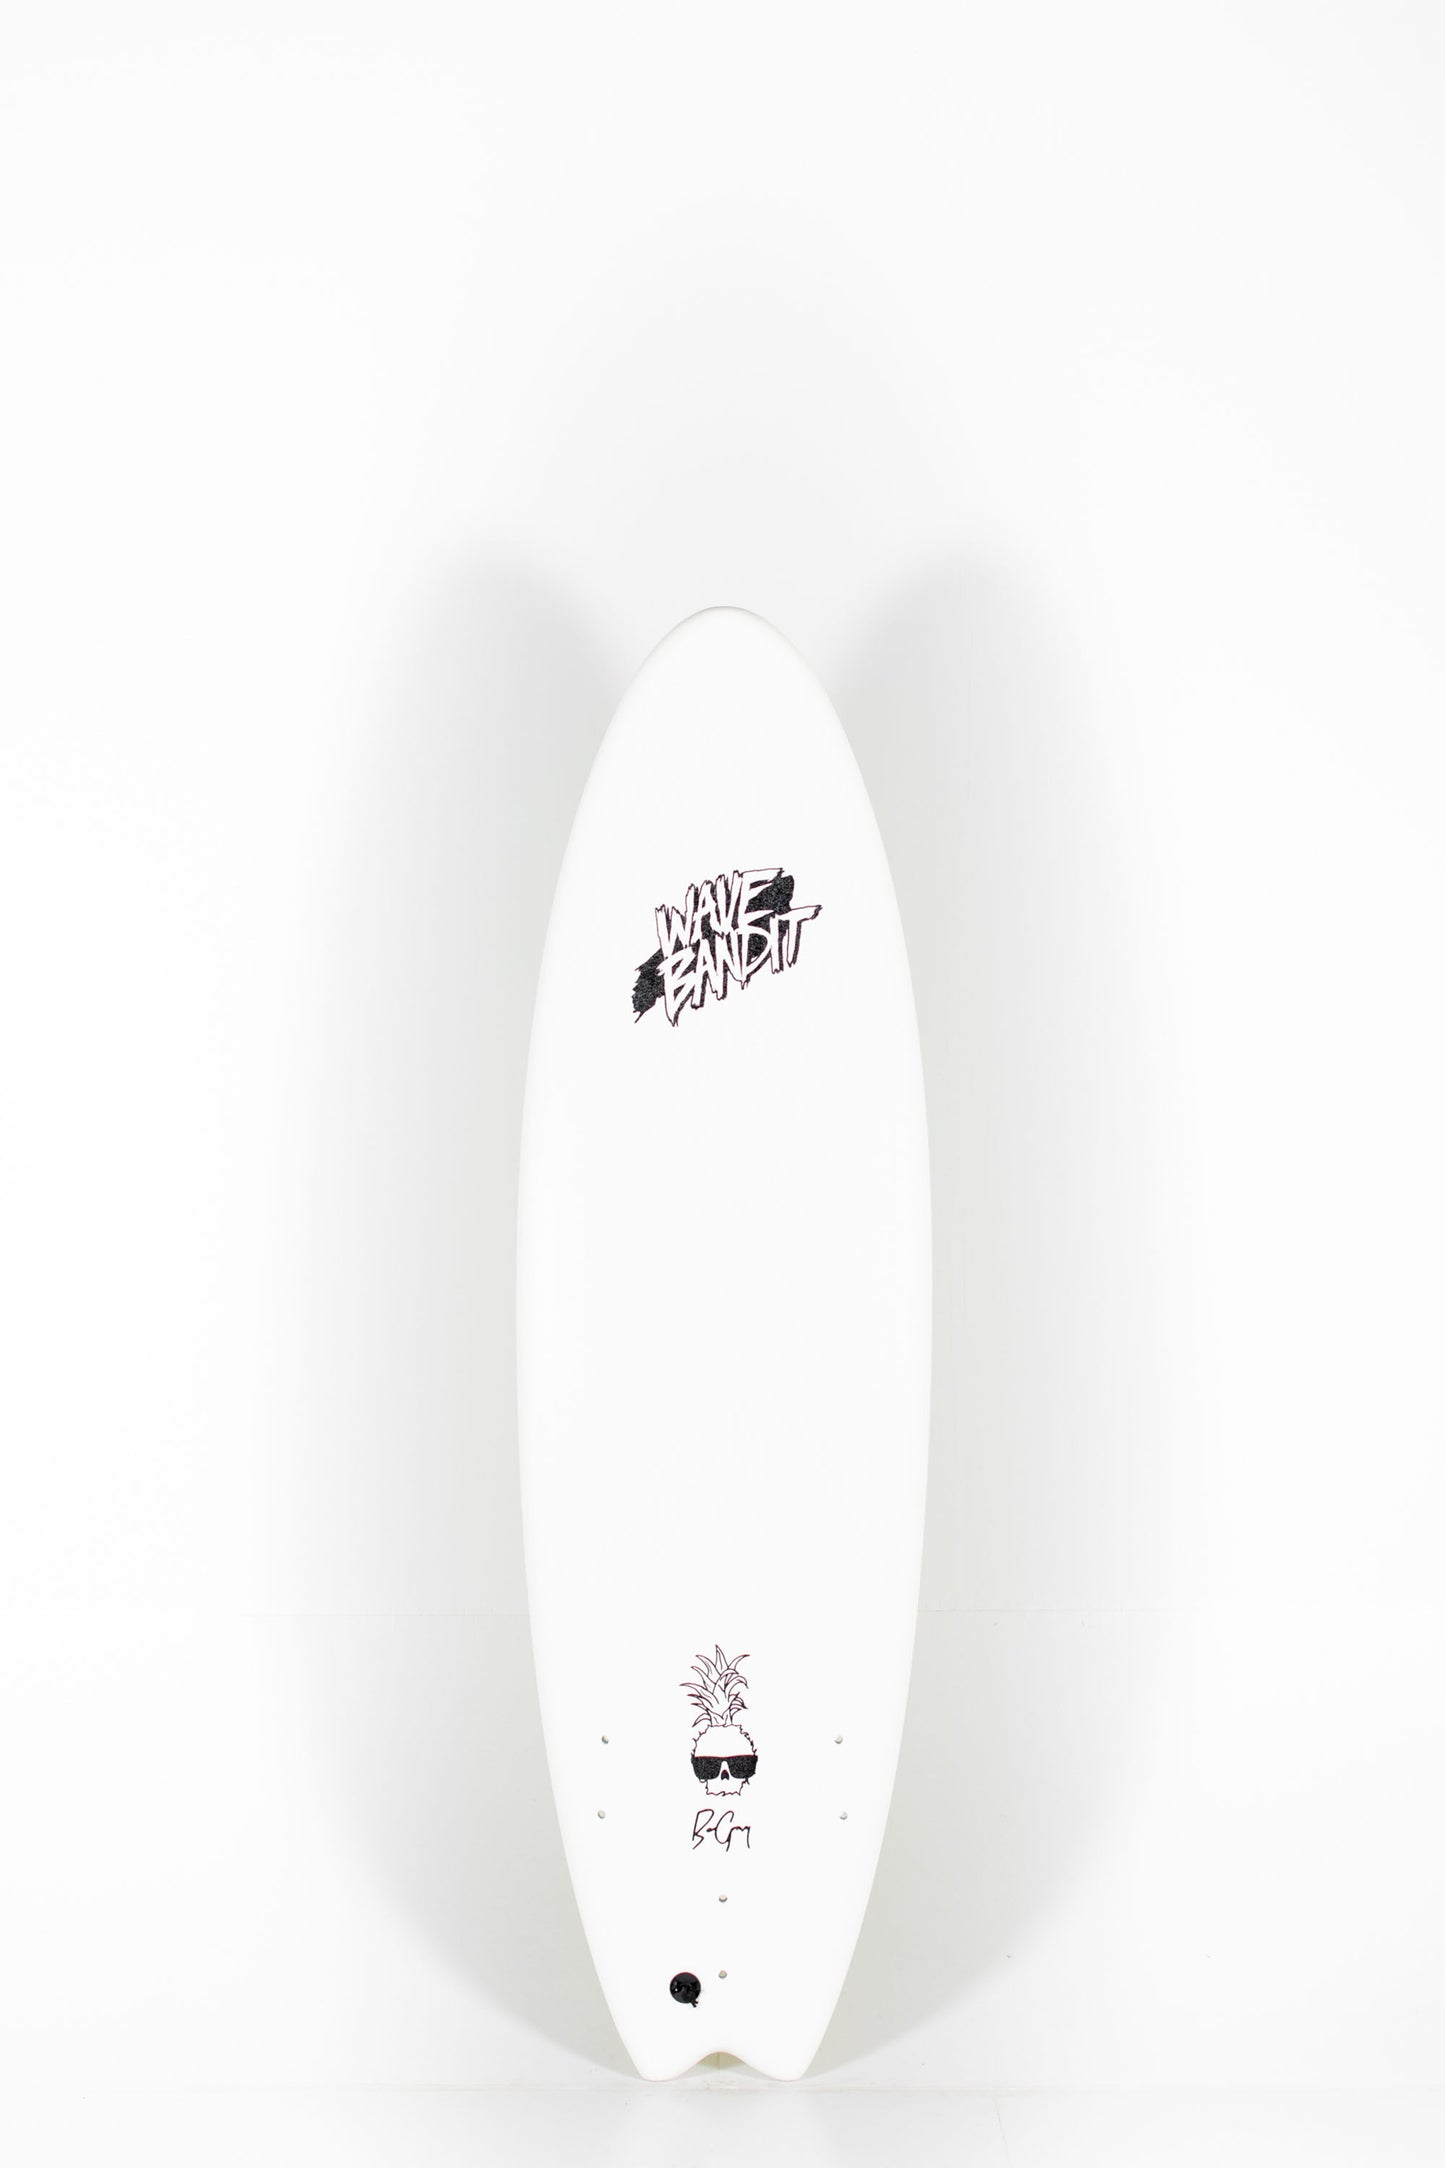 Pukas Surf Shop - Catch Surf - WAVE BANDIT - PERFORMER x BEN GRAVY - 6´6" x 22" x 3,125" x 55L.